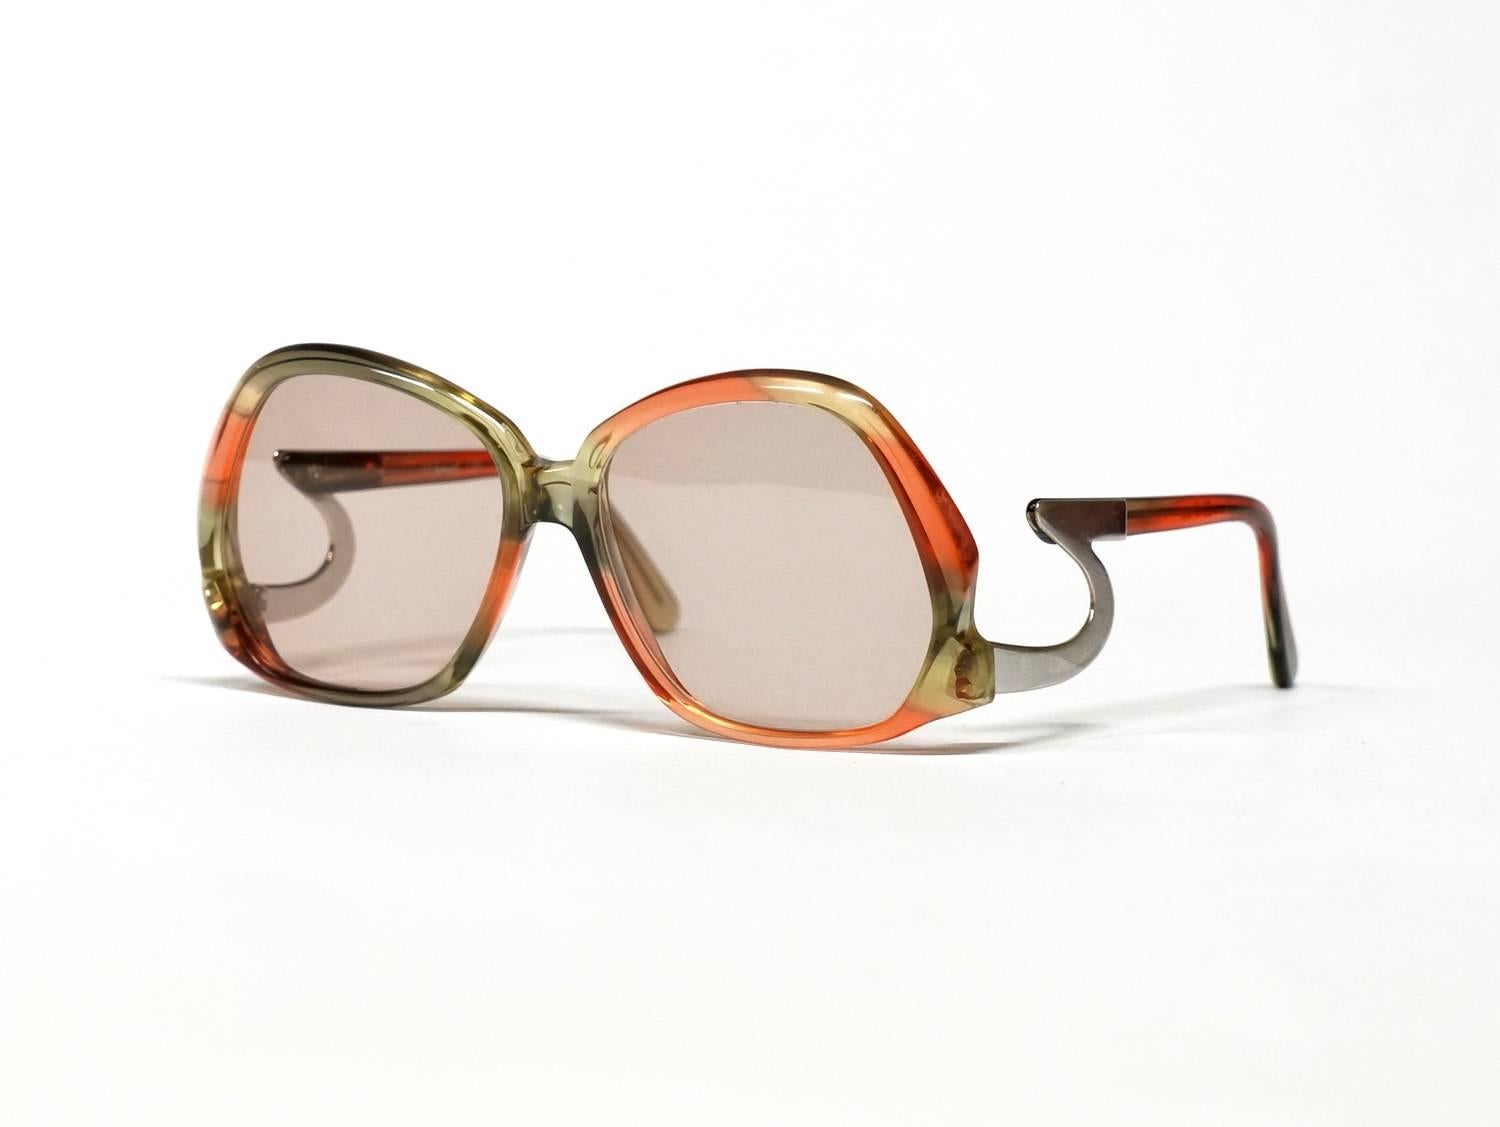 1970's eyeglasses